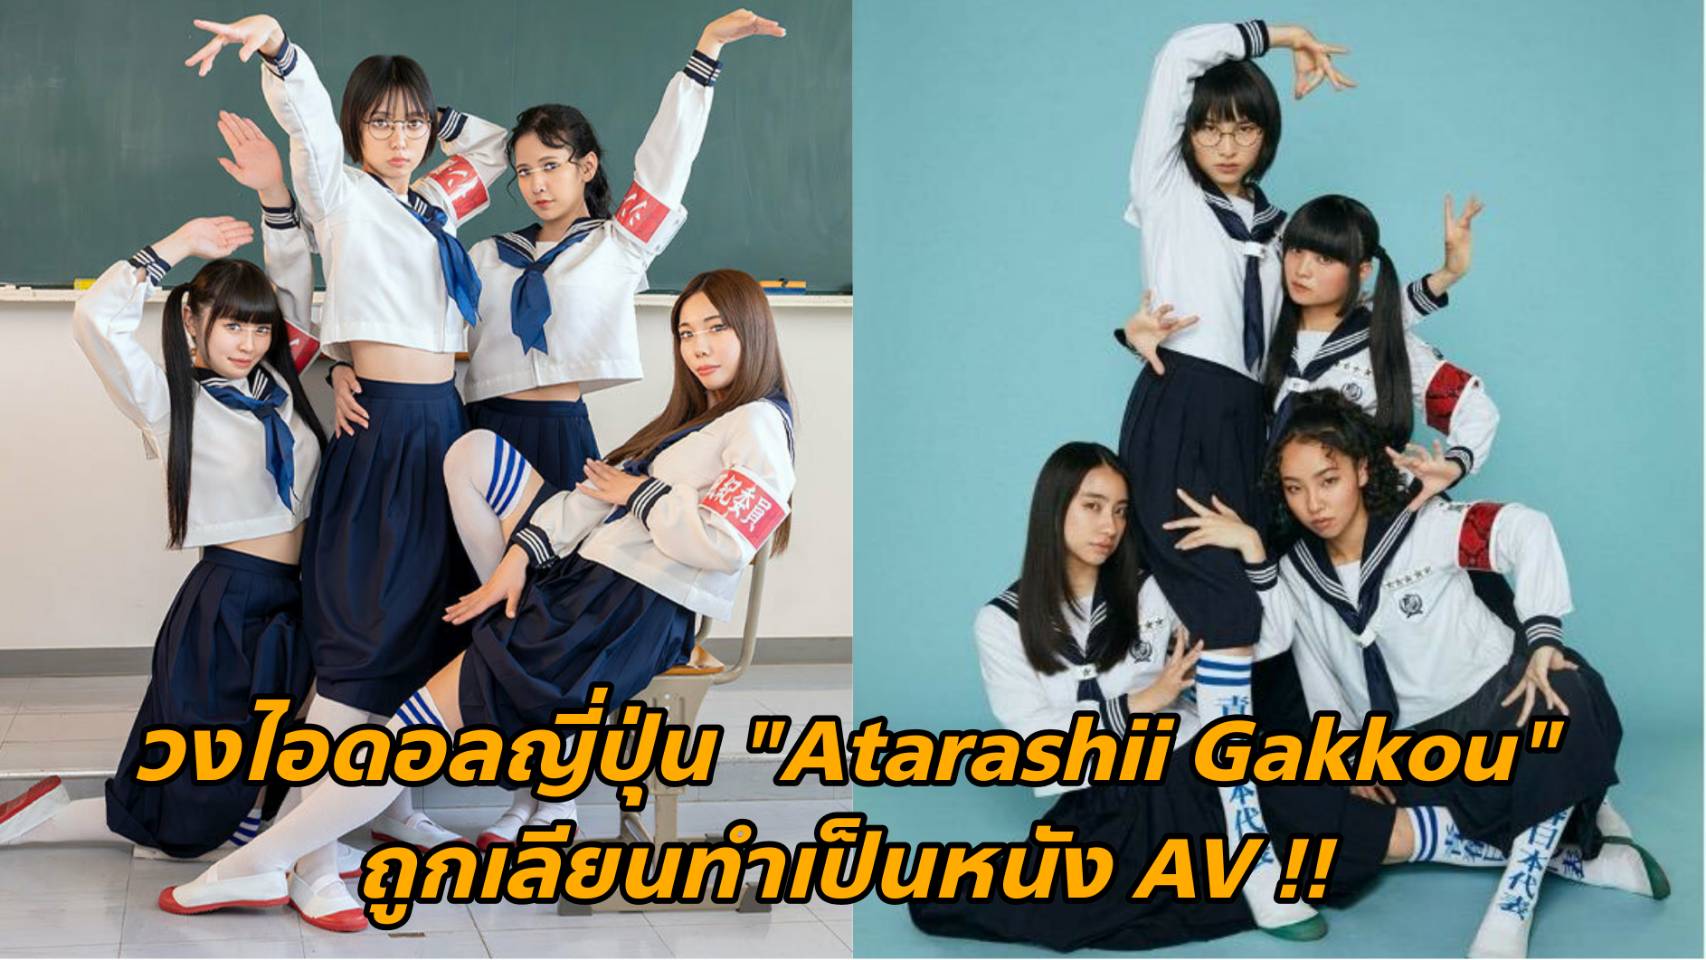 [HUNTC-006] วงไอดอลญี่ปุ่น "Atarashii Gakkou" ถูกเลียนทำเป็นหนัง AV 13